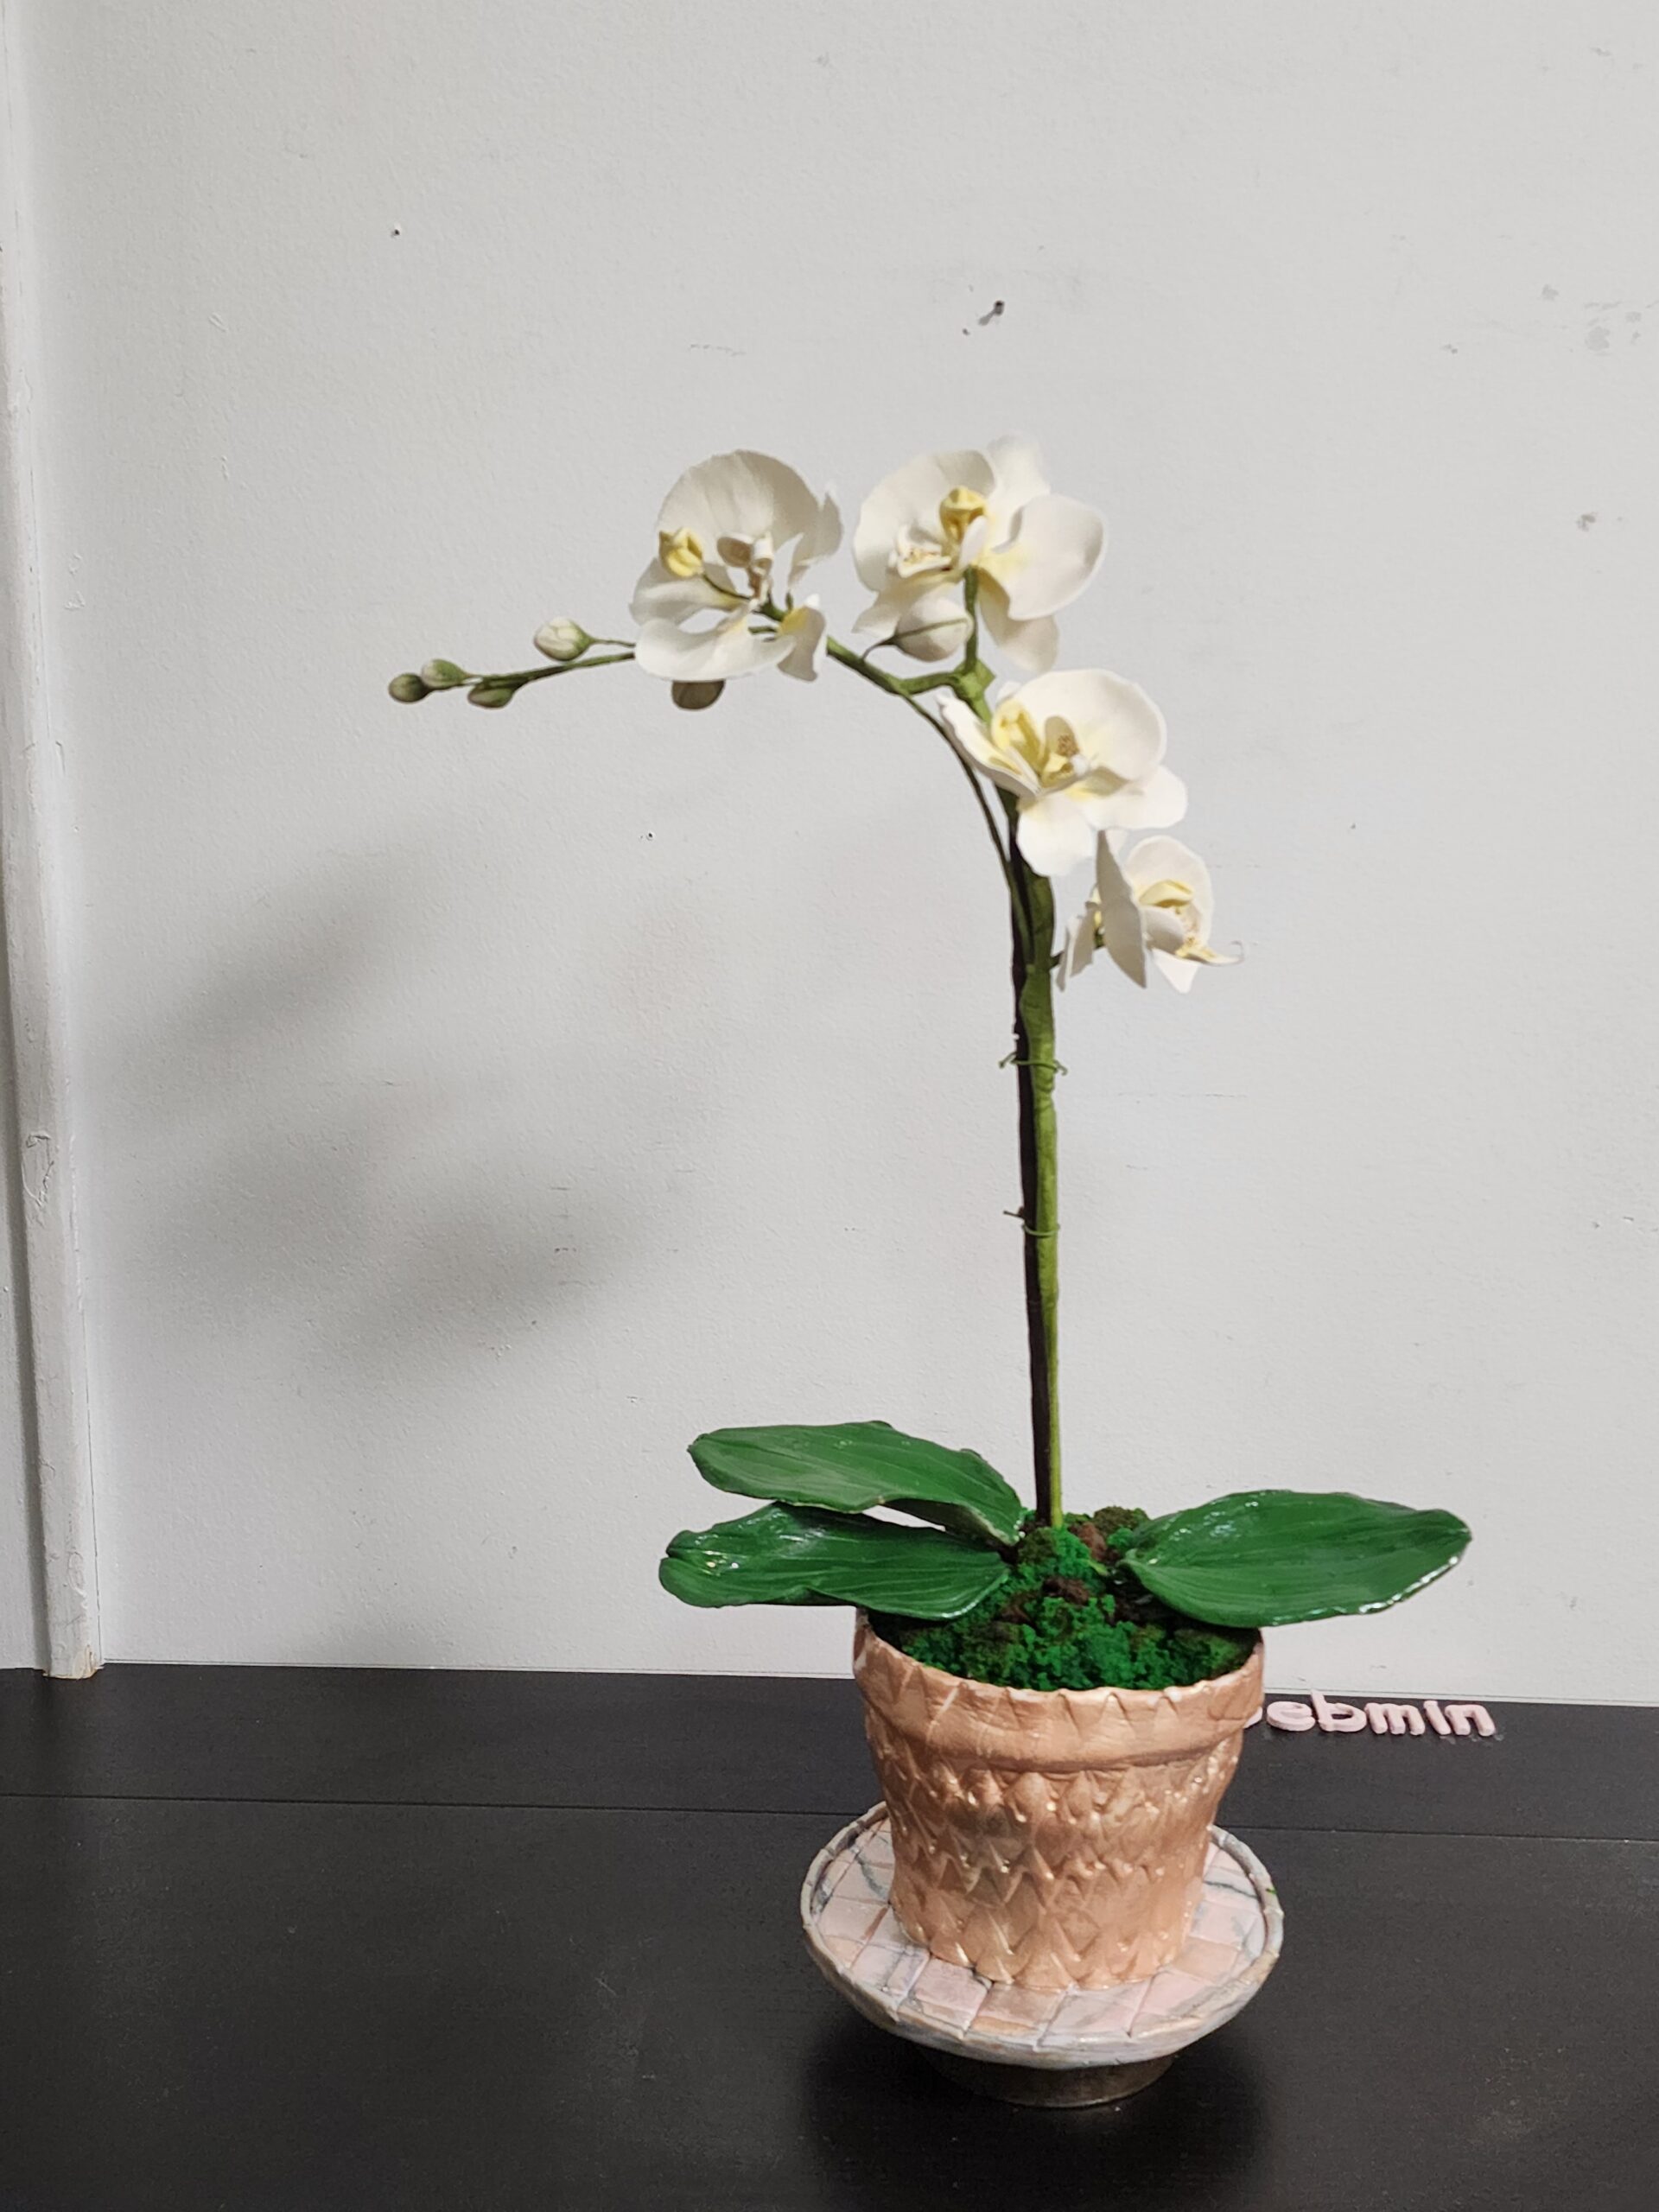 Debmin Torres - Moth Orchid Sugar Flower - December 2022